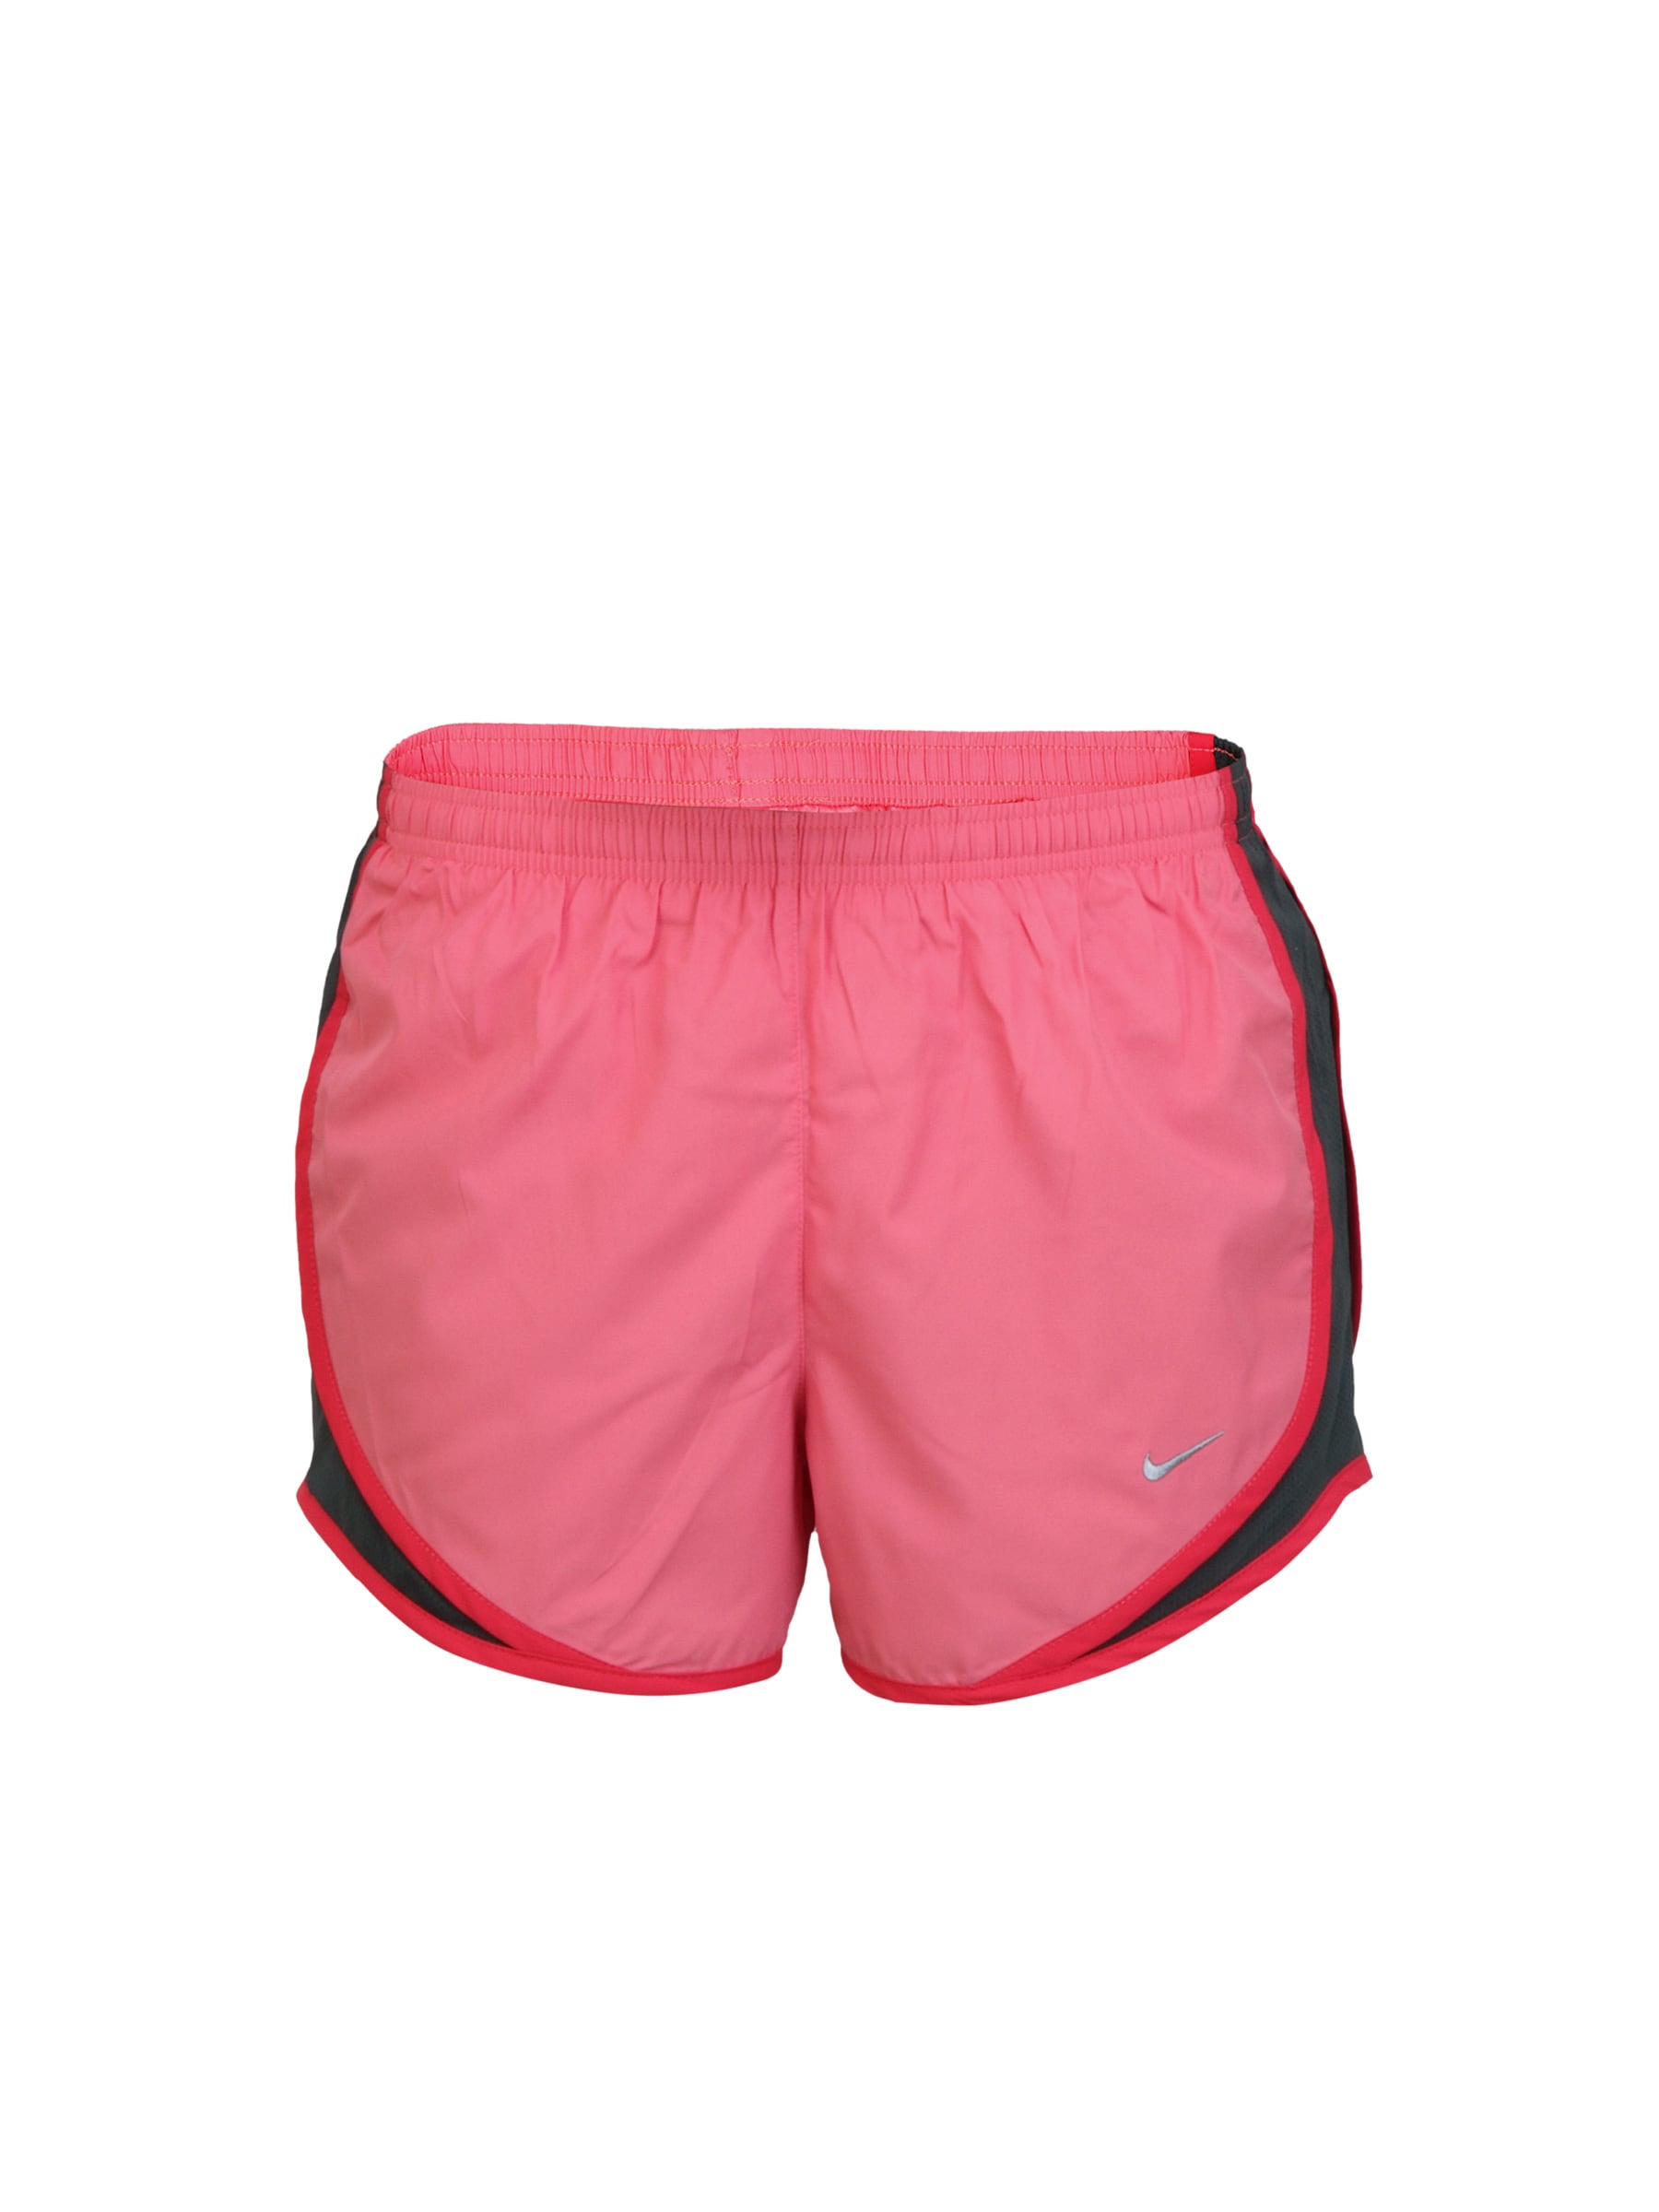 Nike Women Solid Pink Shorts